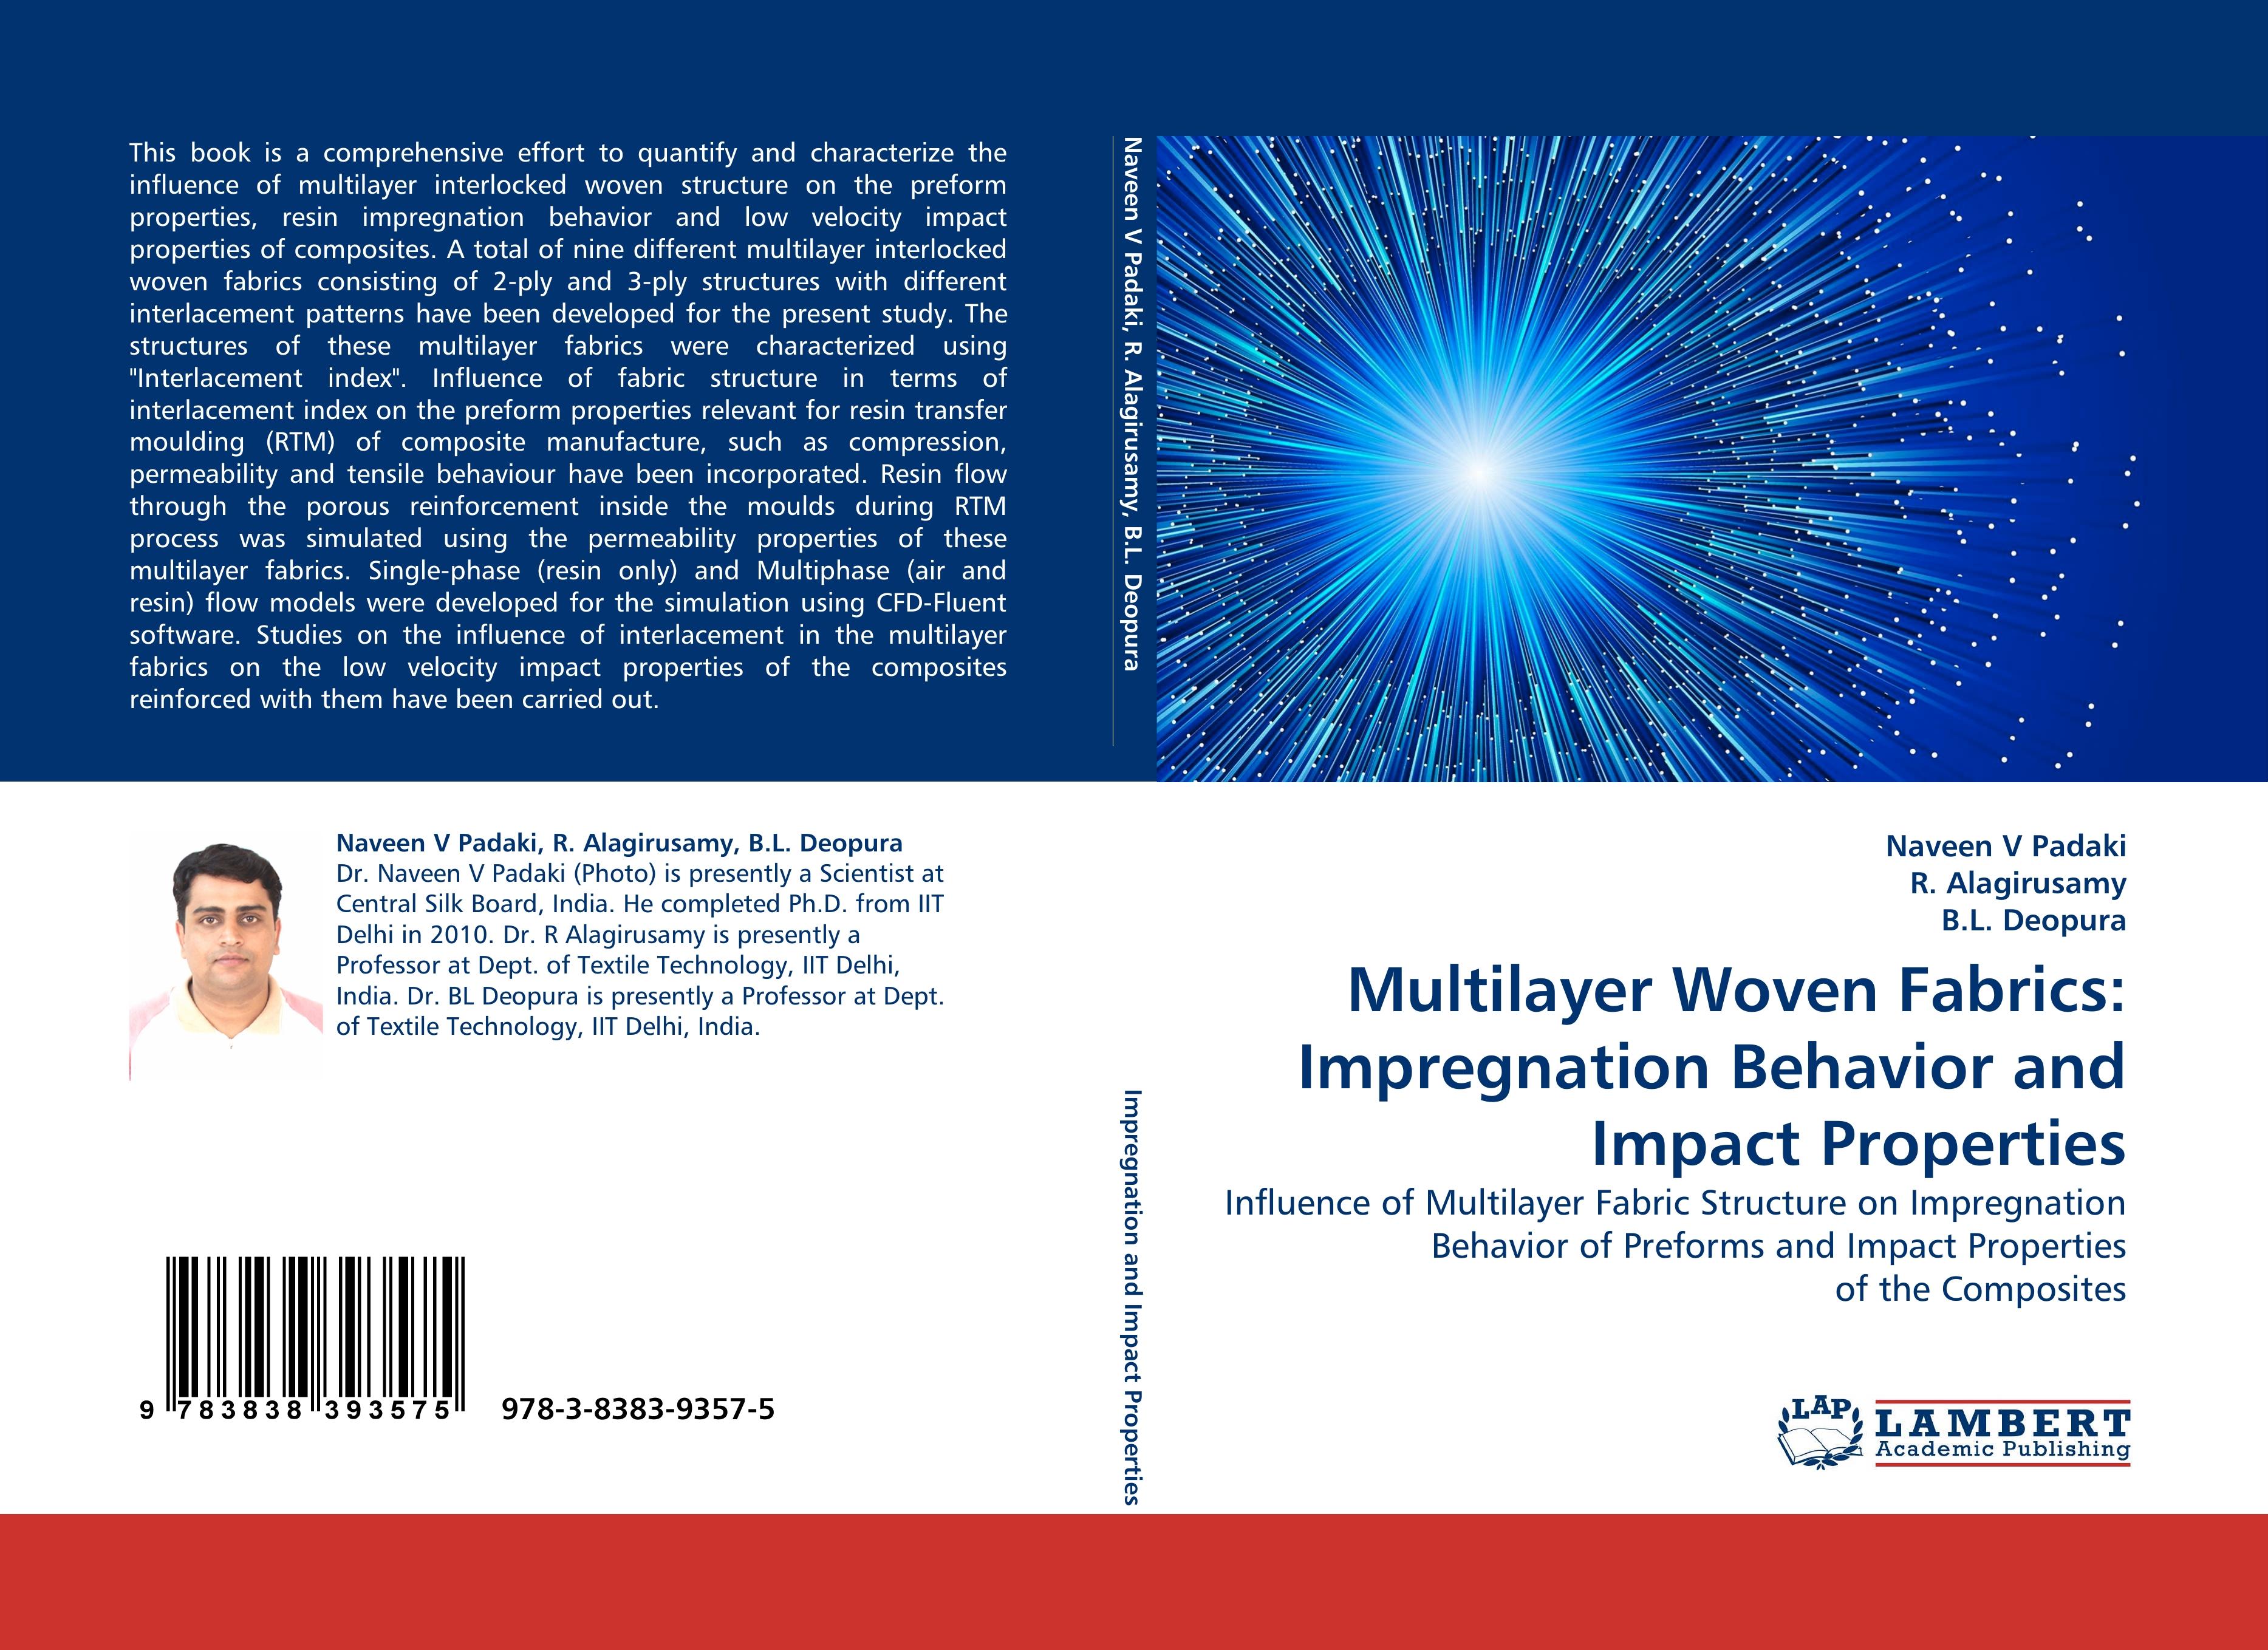 Multilayer Woven Fabrics: Impregnation Behavior and Impact Properties - Naveen V Padaki|R. Alagirusamy|B.L. Deopura